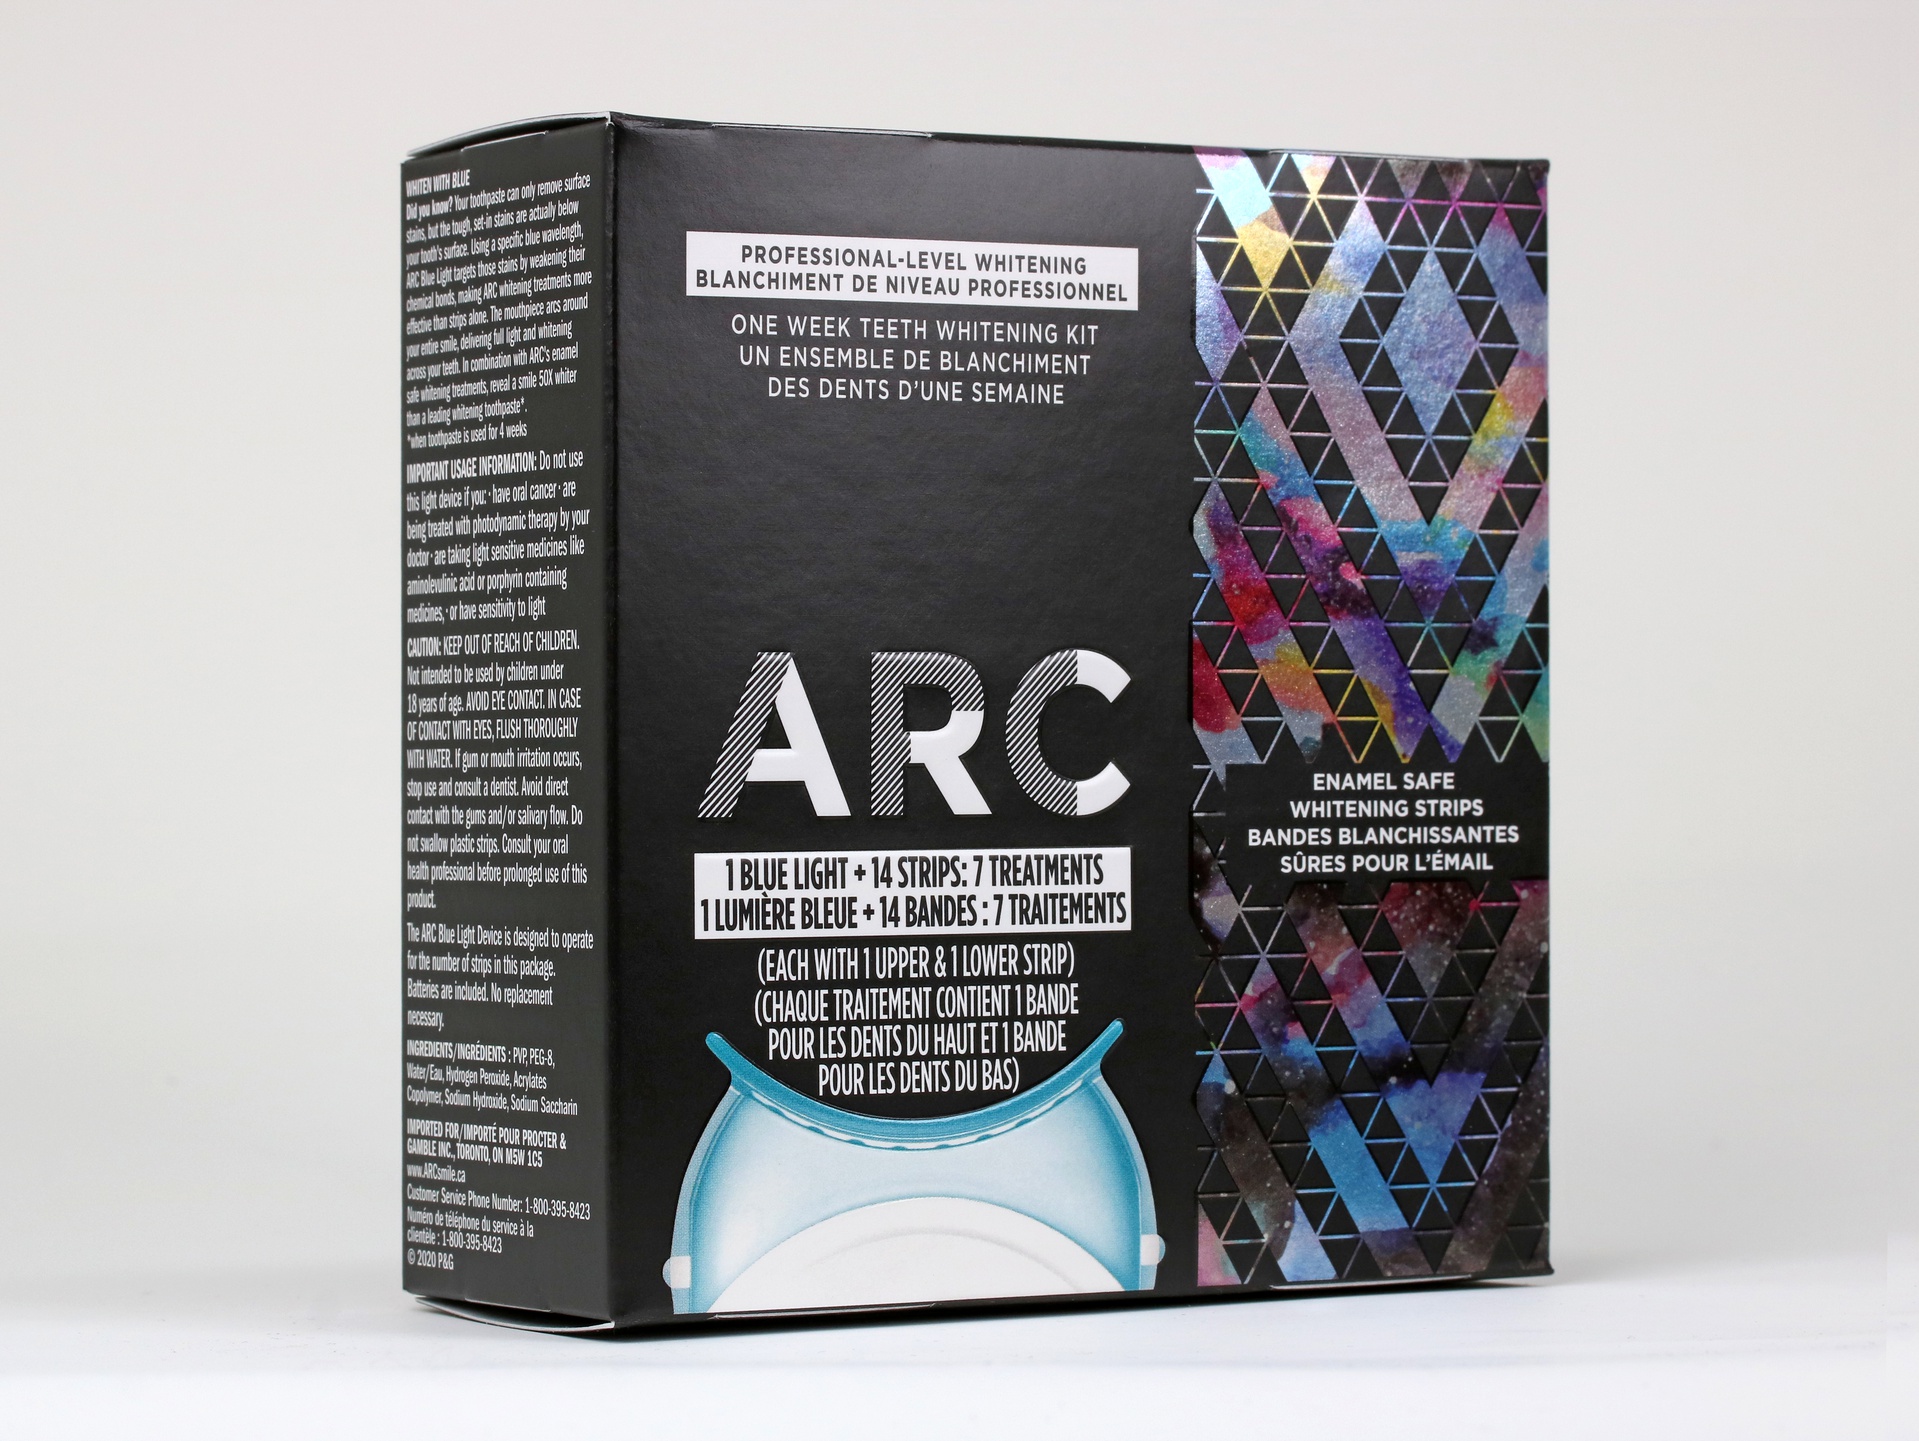 ARC Blue Light Teeth Whitening Kit folding cartons